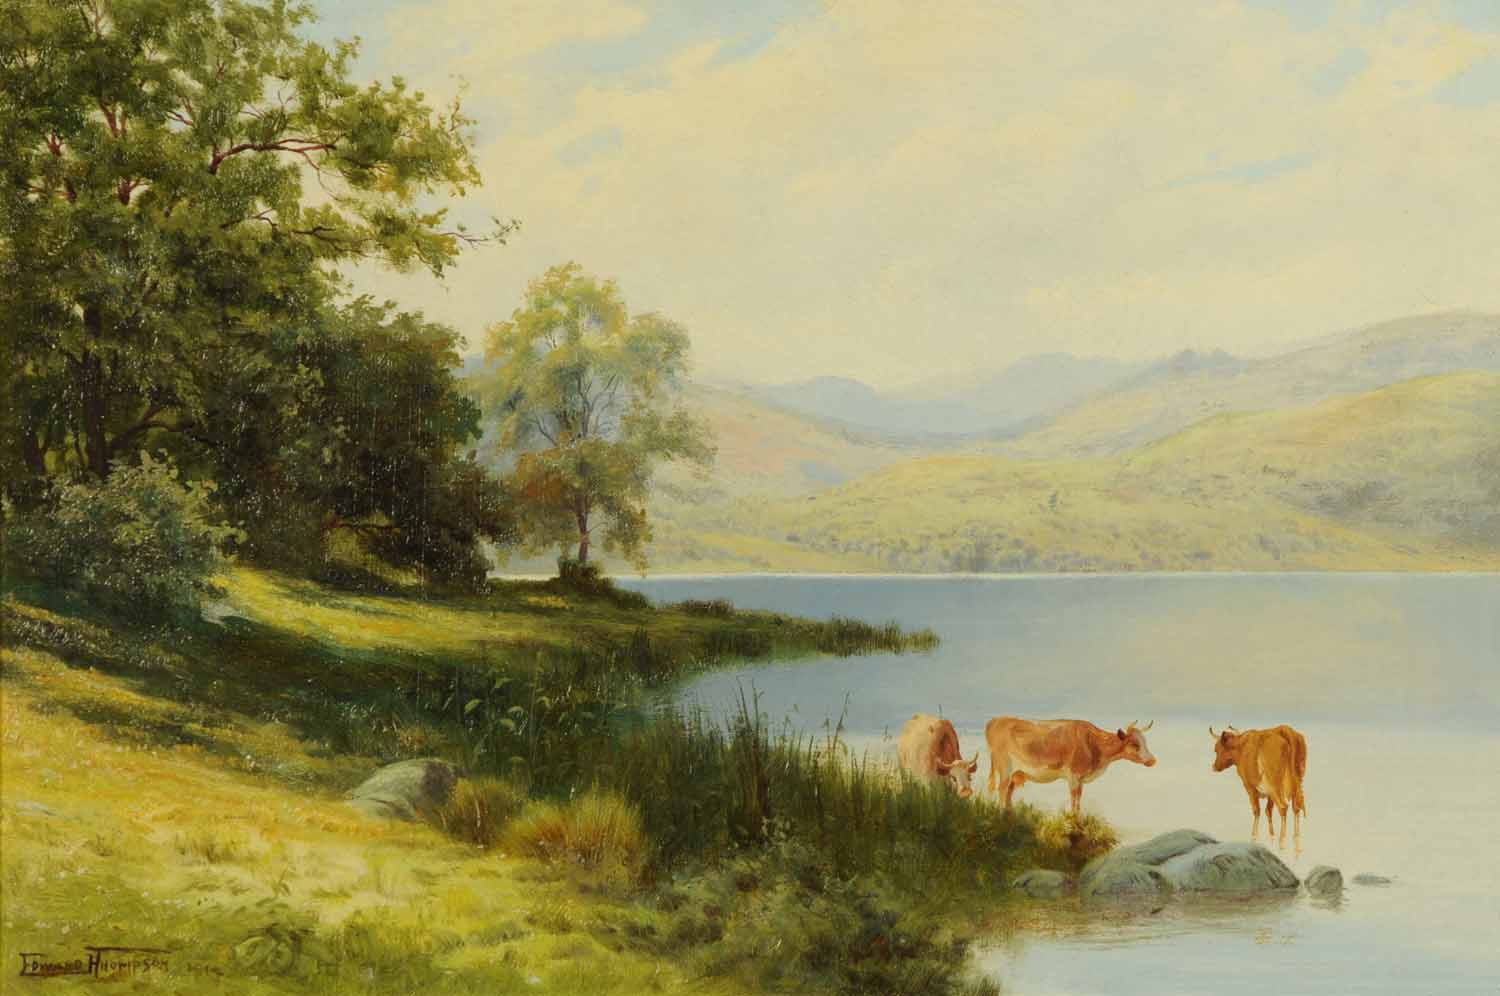 Edward Horace Thompson (1879-1949), oil on canvas, "Full Summer, Rydal Water".  11.